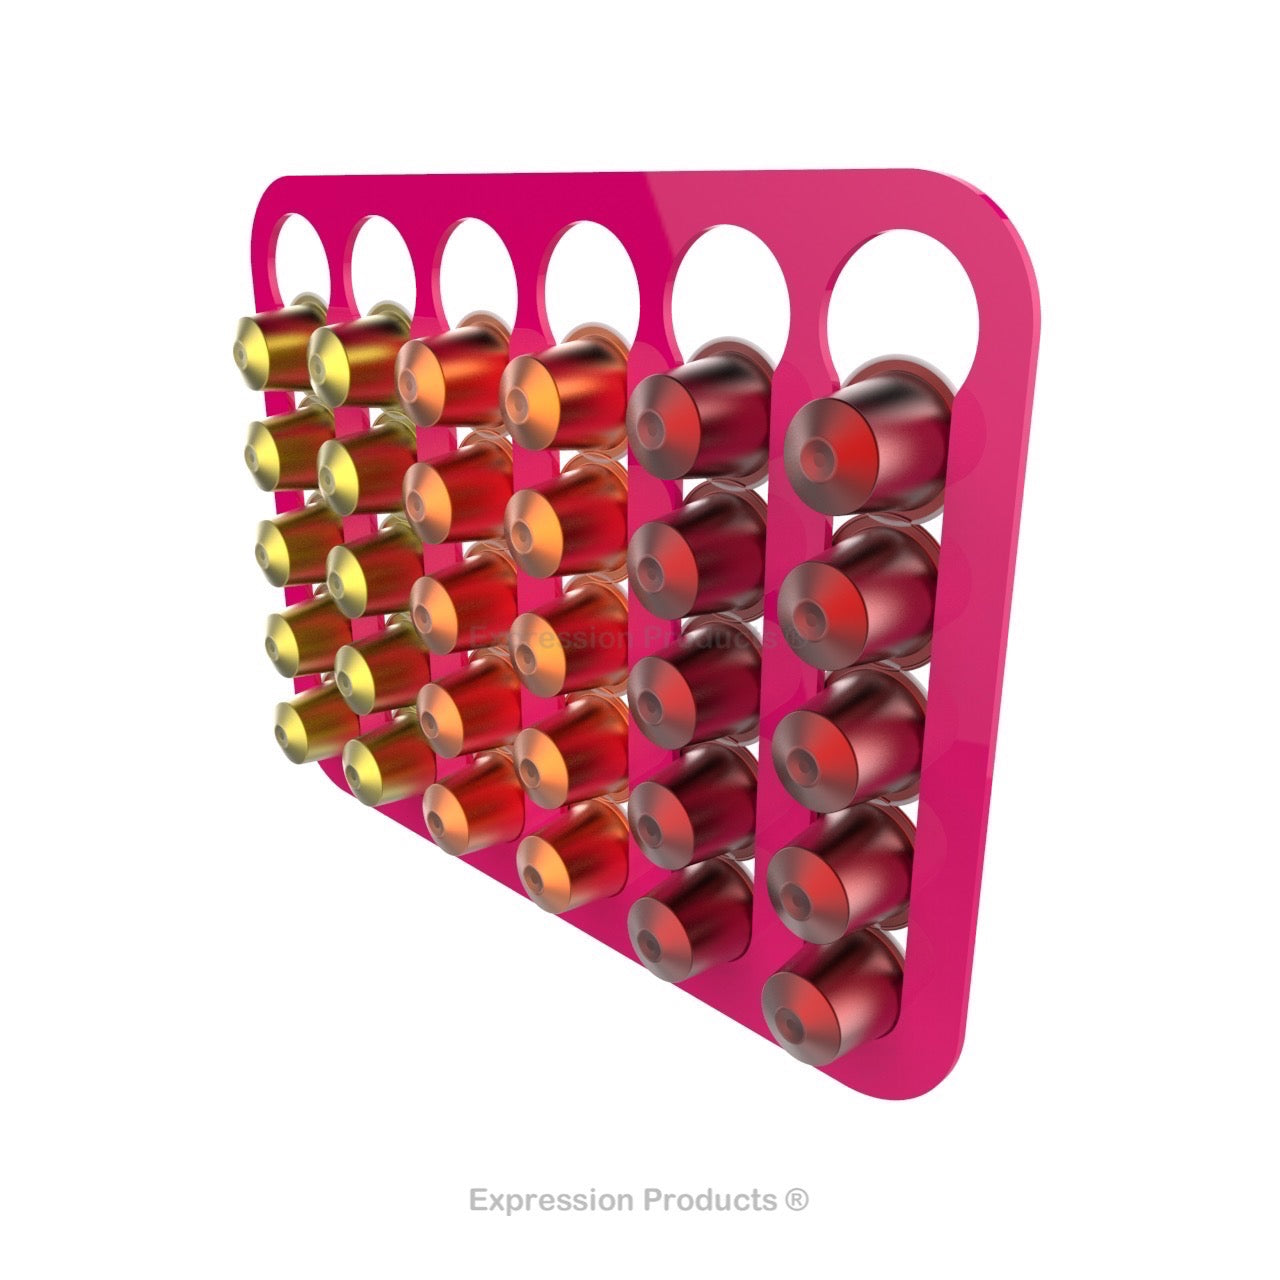 Magnetic Nespresso Original Line coffee pod holder shown in pink holding 30 pods